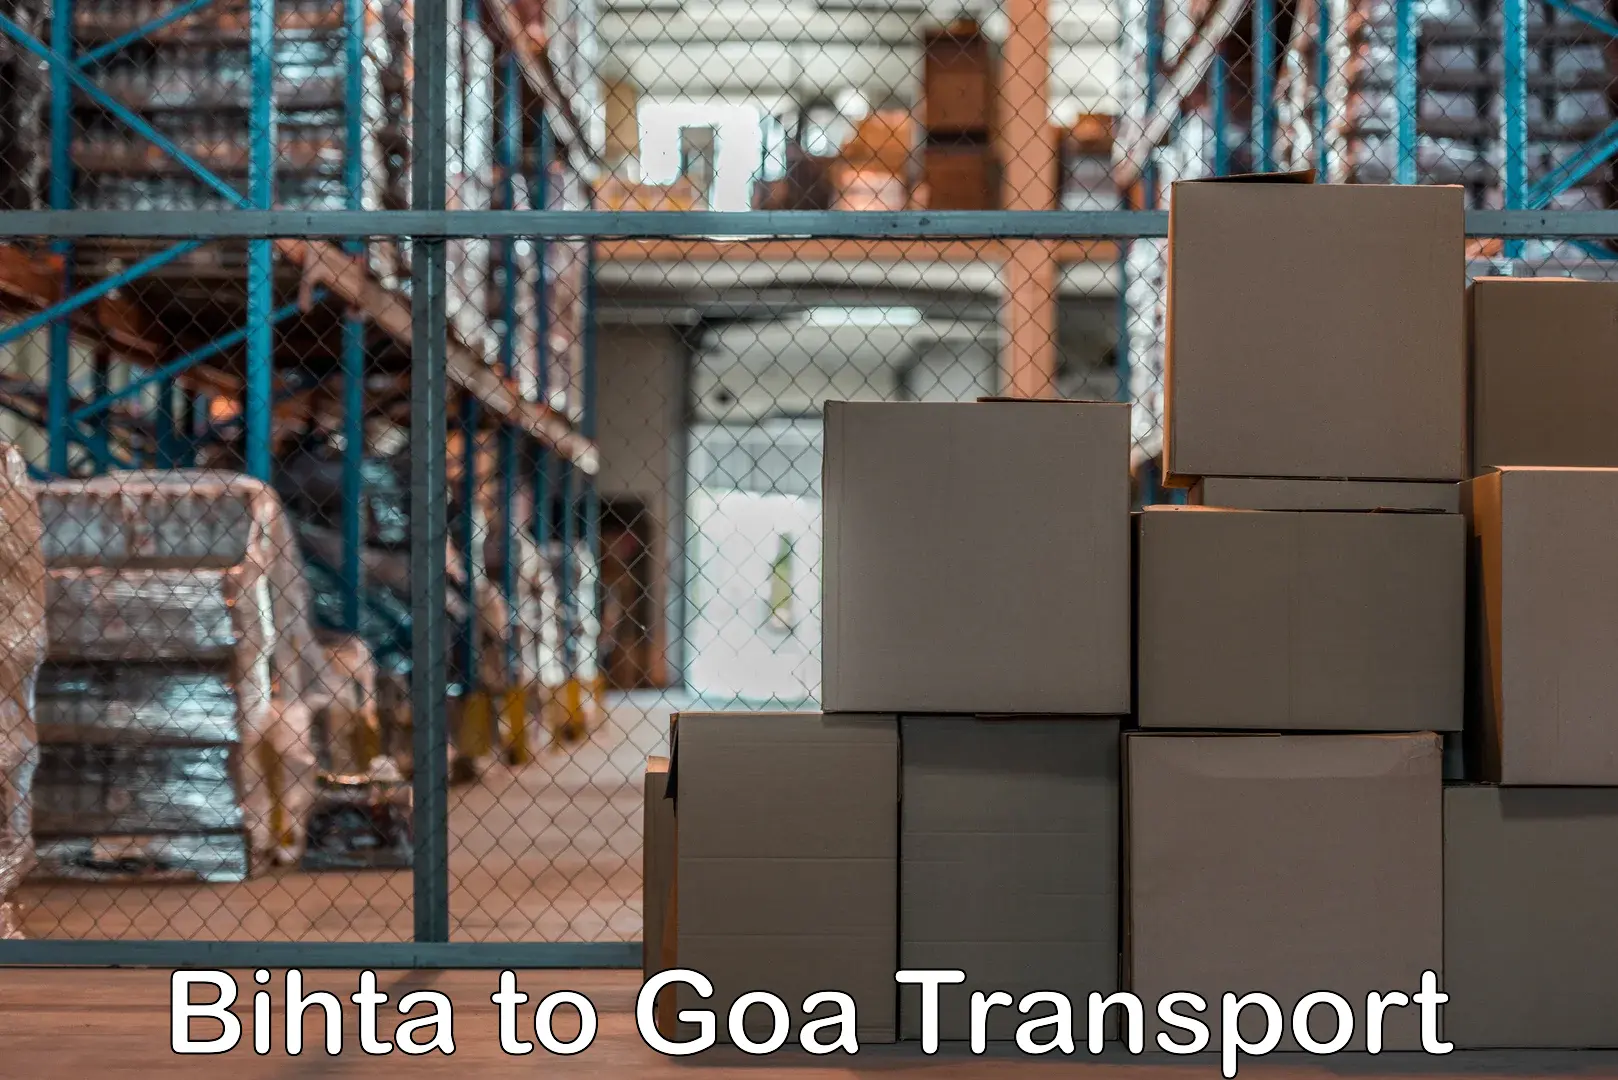 Transport in sharing Bihta to Goa